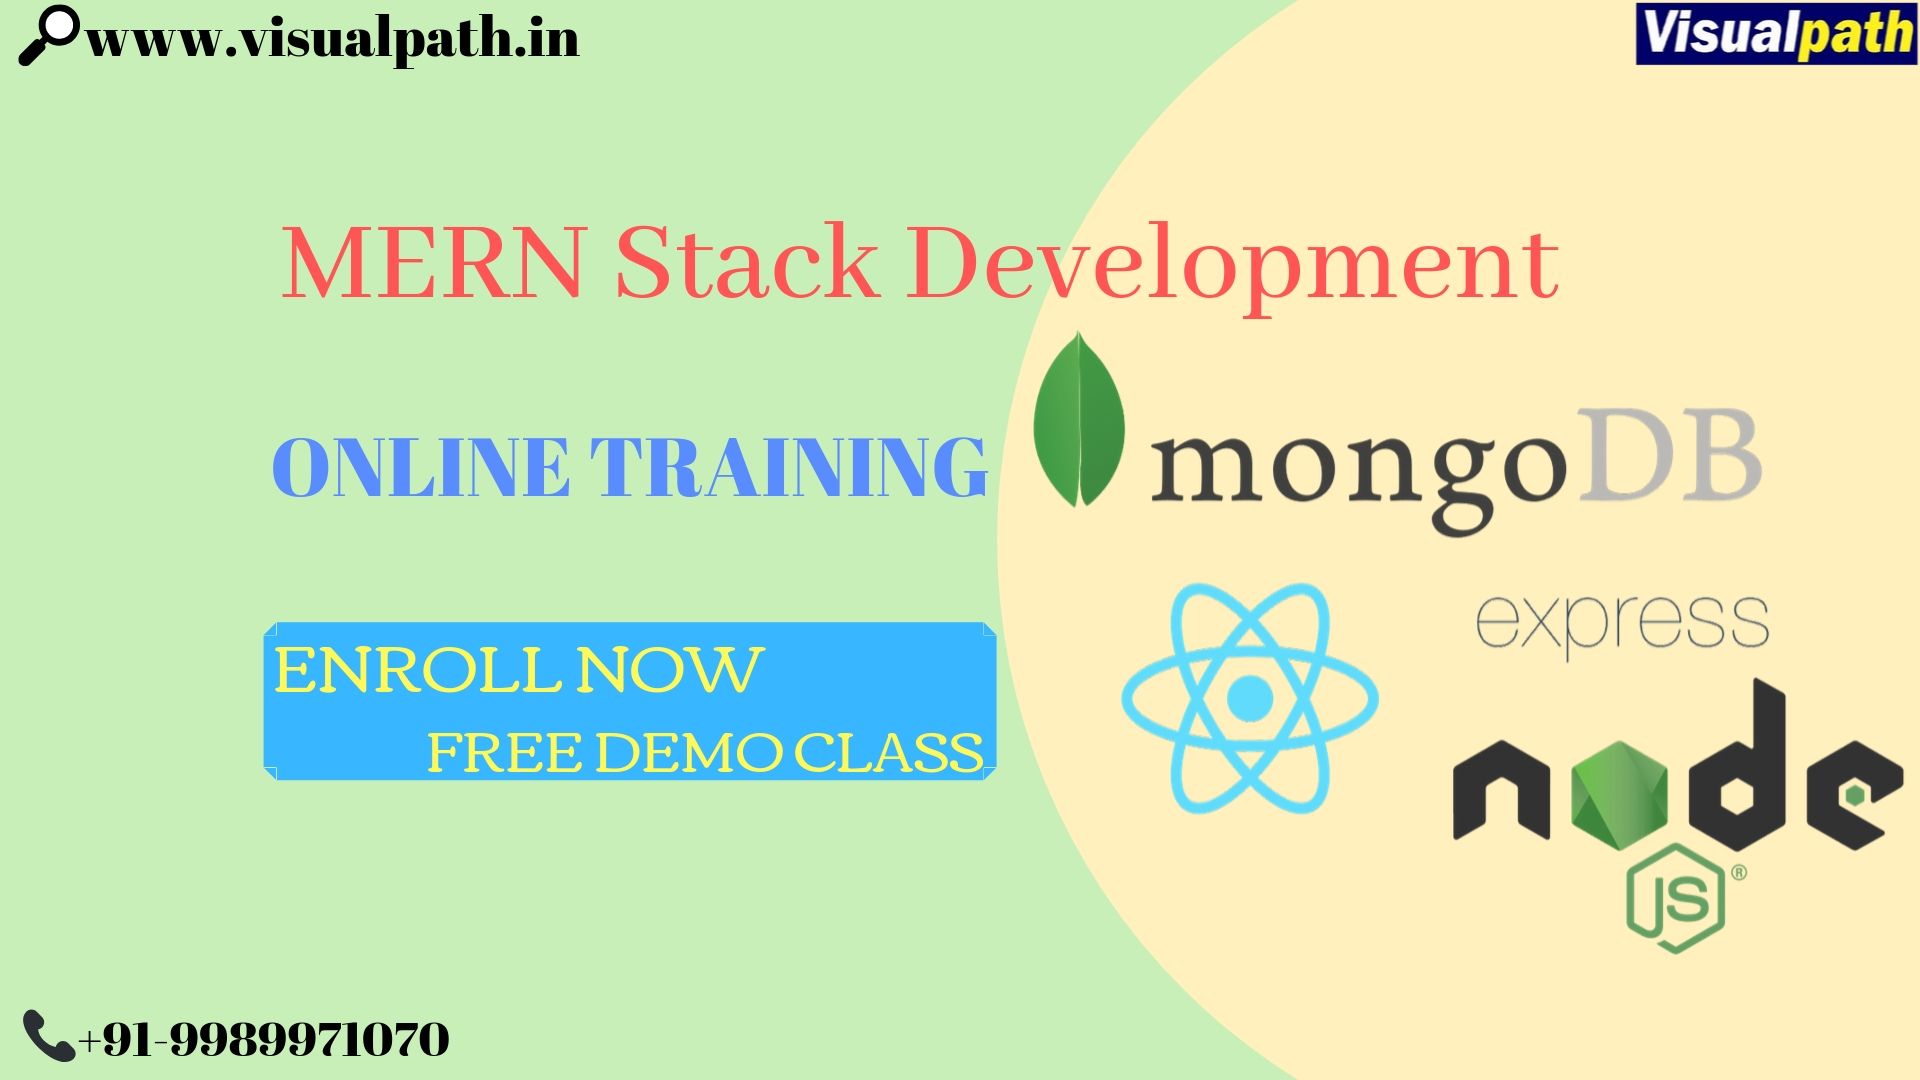 Mern stack online training, Hyderabad, Telangana, India